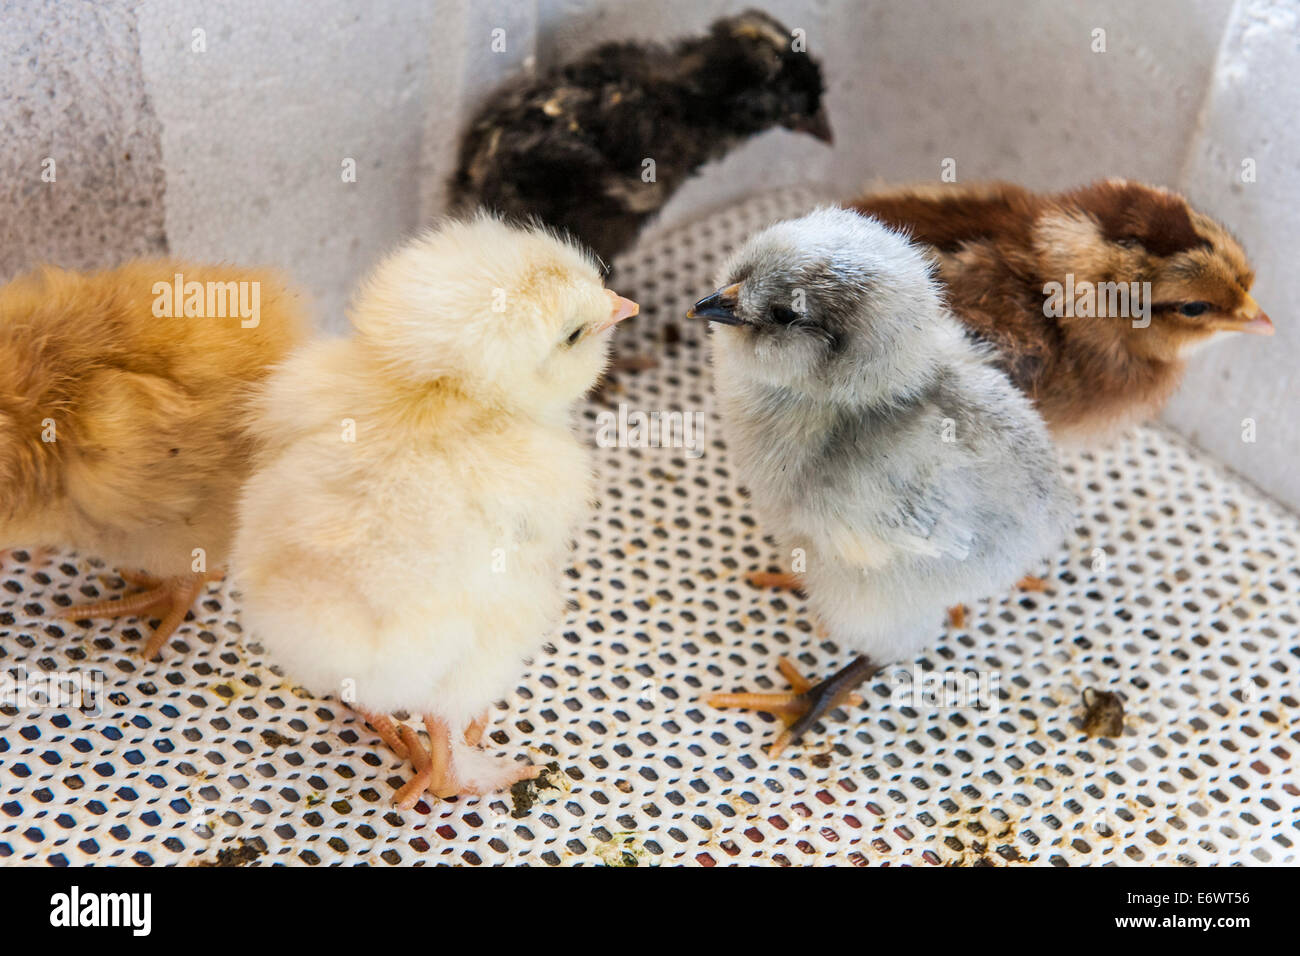 Newborn chickens in an incubator. Stock Photo